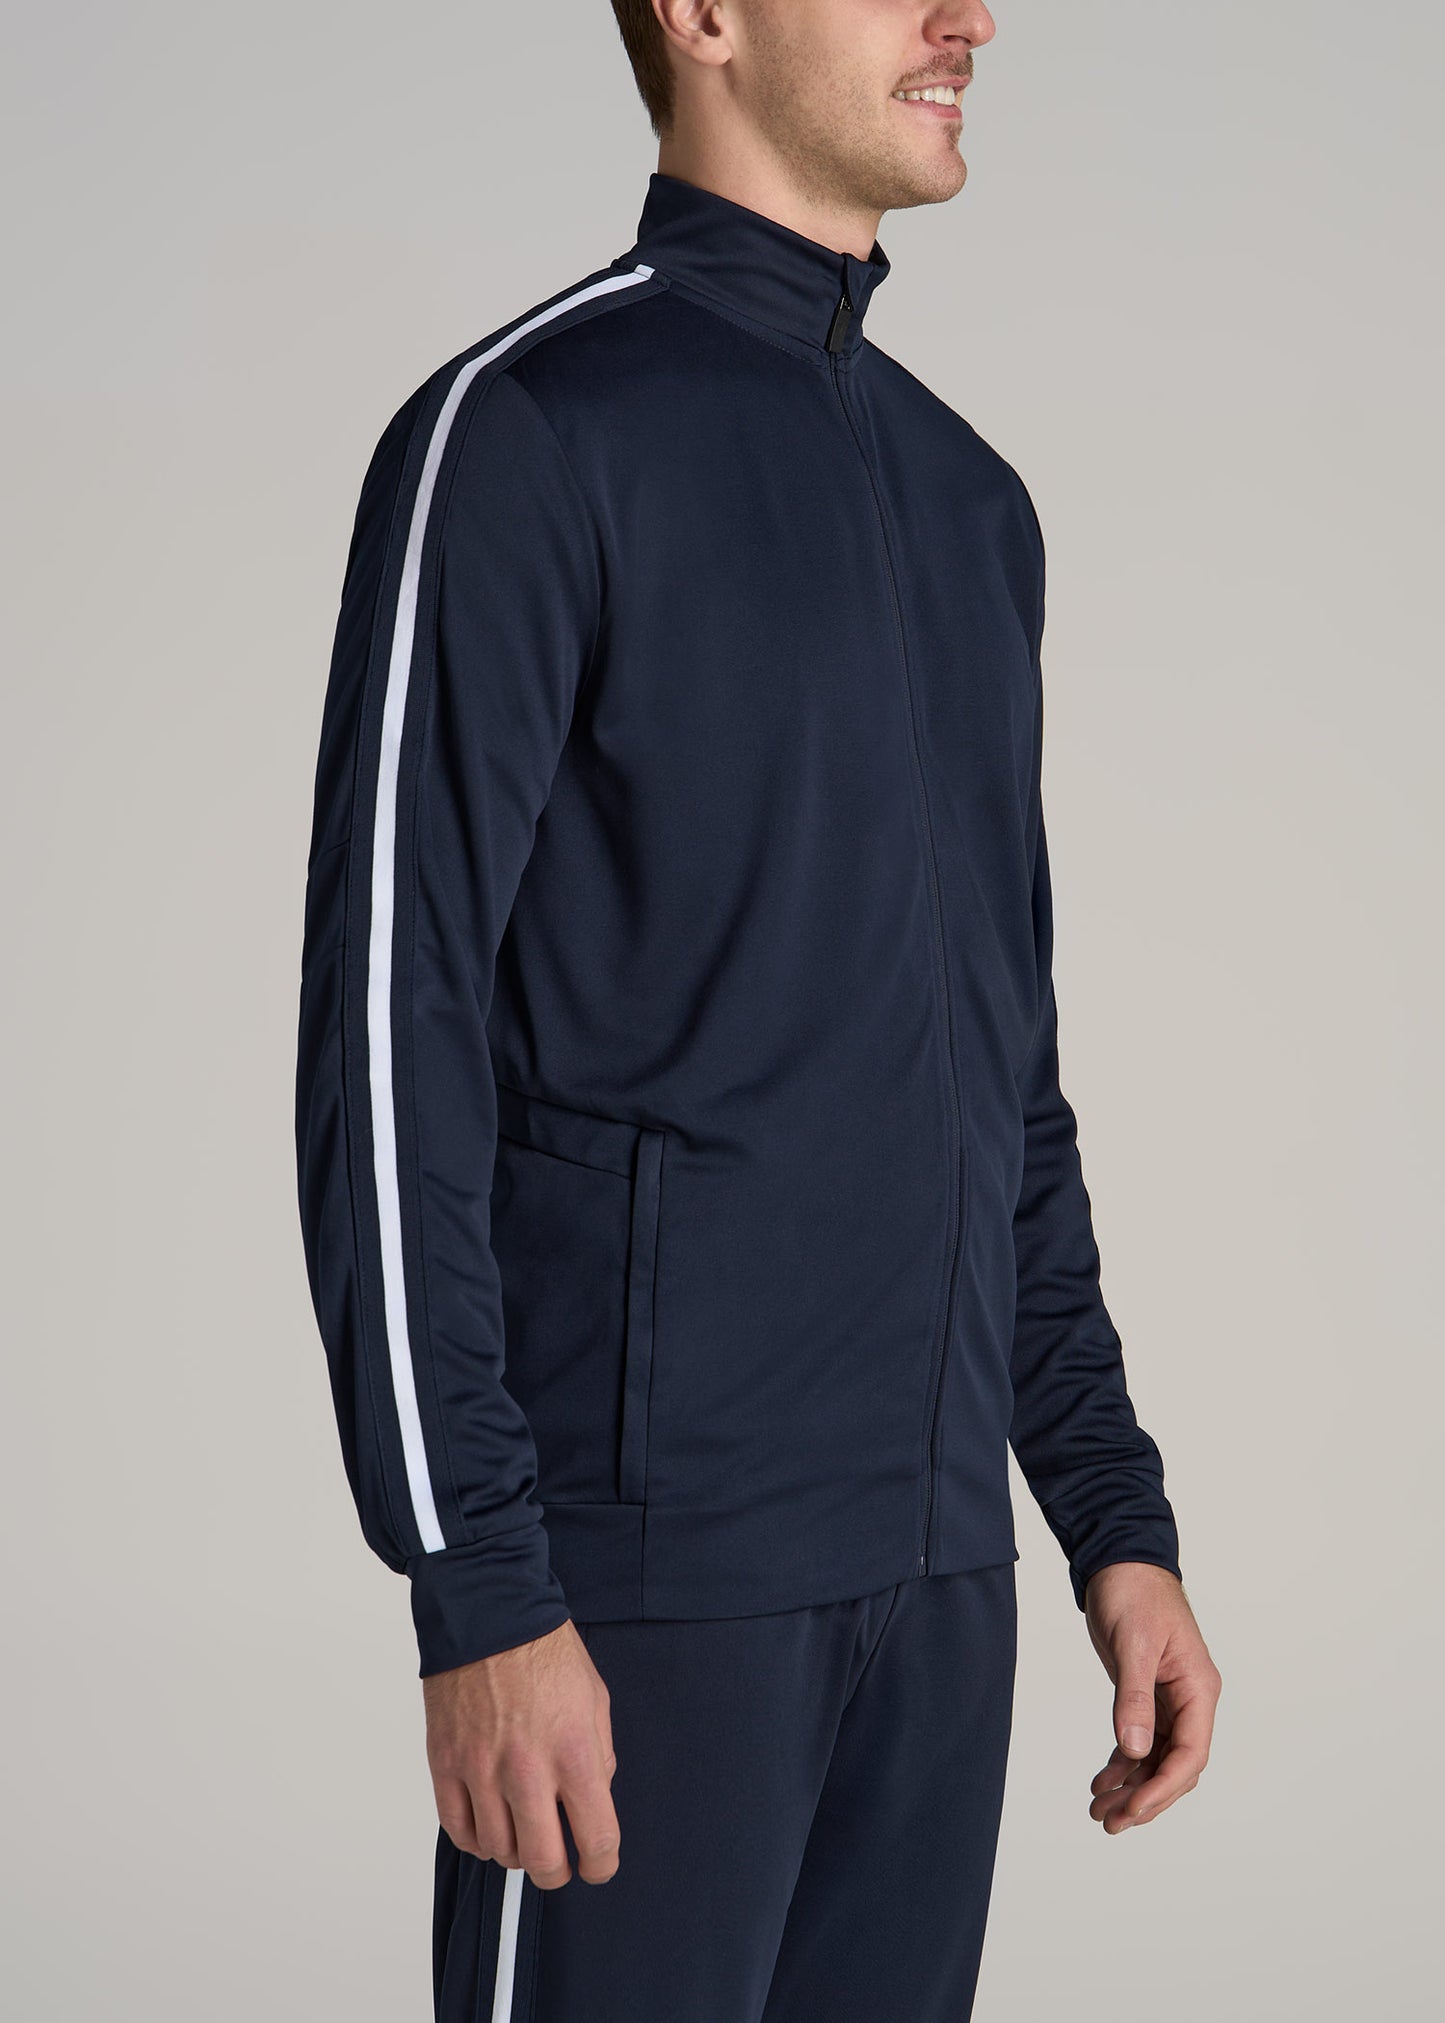 Athletic Stripe Tall Men's Jacket in Navy-White Stripe